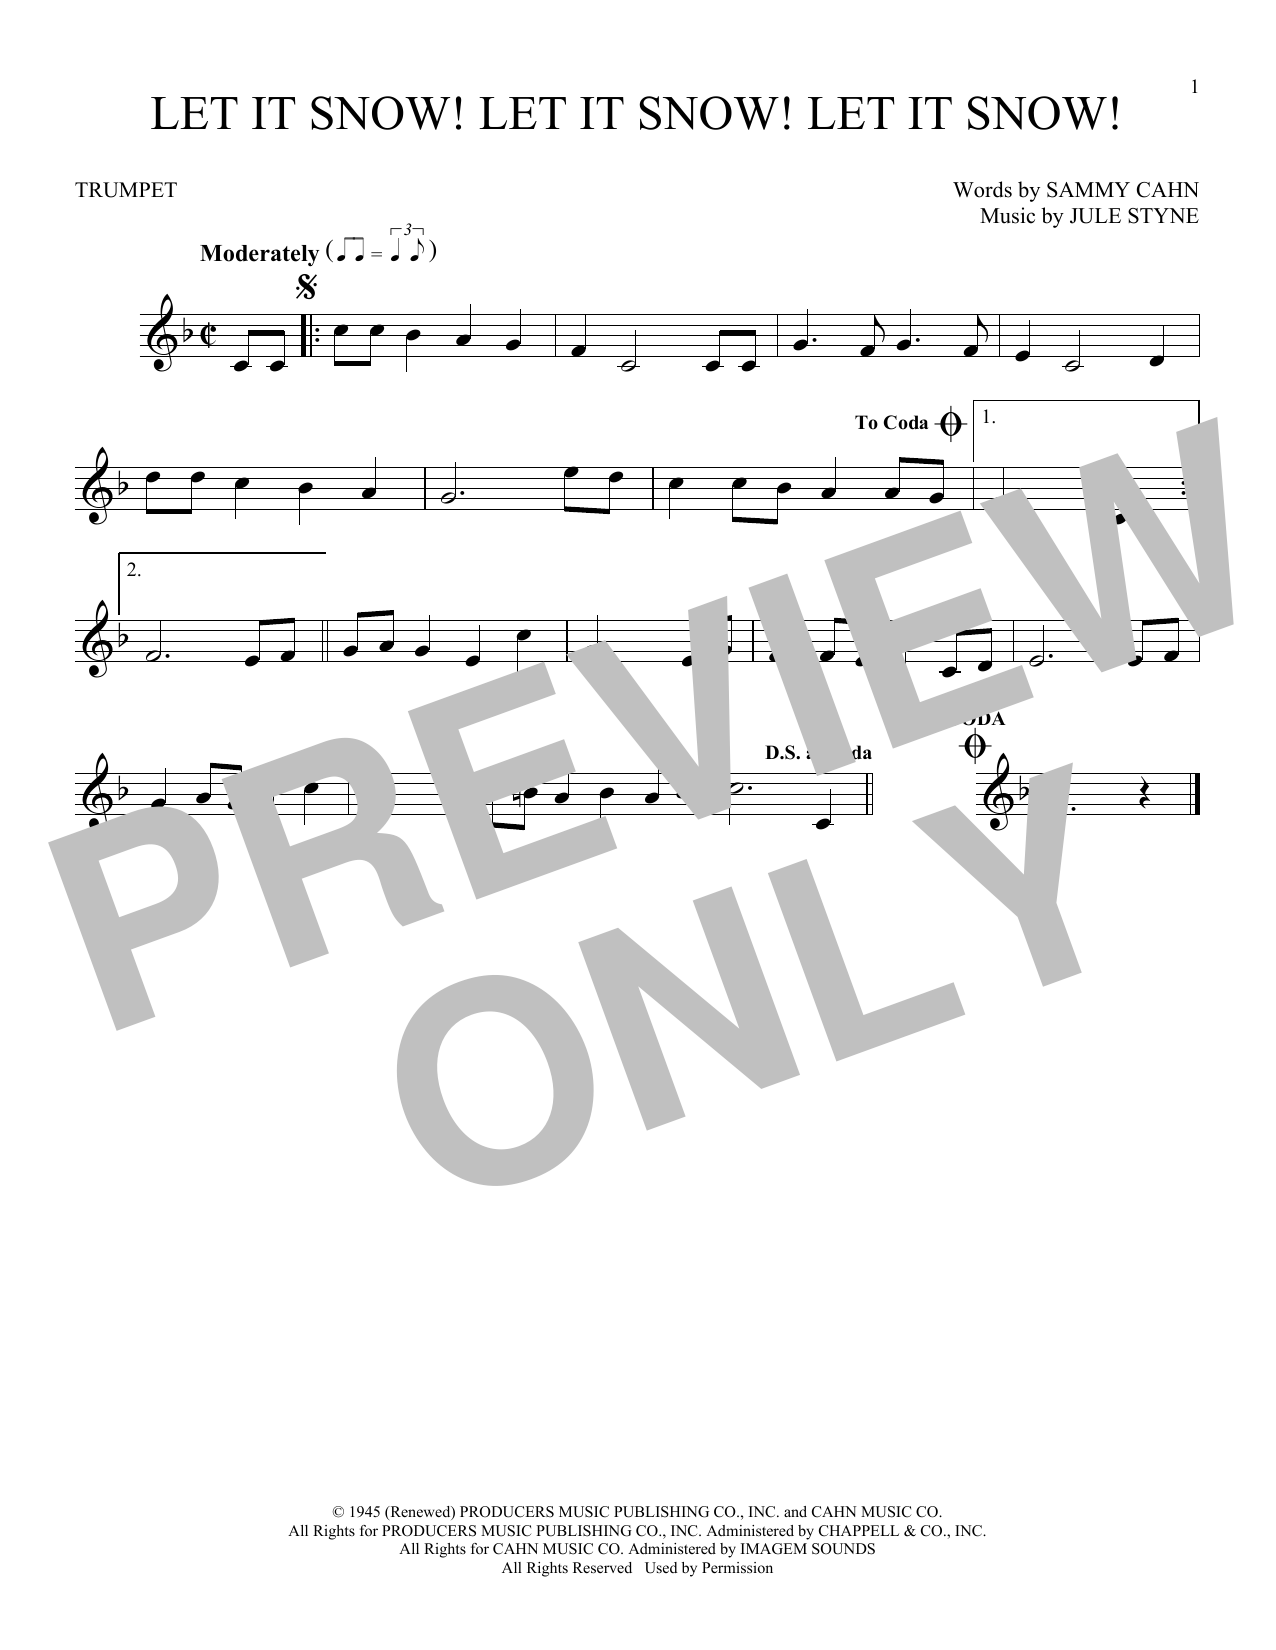 Sammy Cahn & Julie Styne Let It Snow! Let It Snow! Let It Snow! Sheet Music Notes & Chords for Guitar Lead Sheet - Download or Print PDF